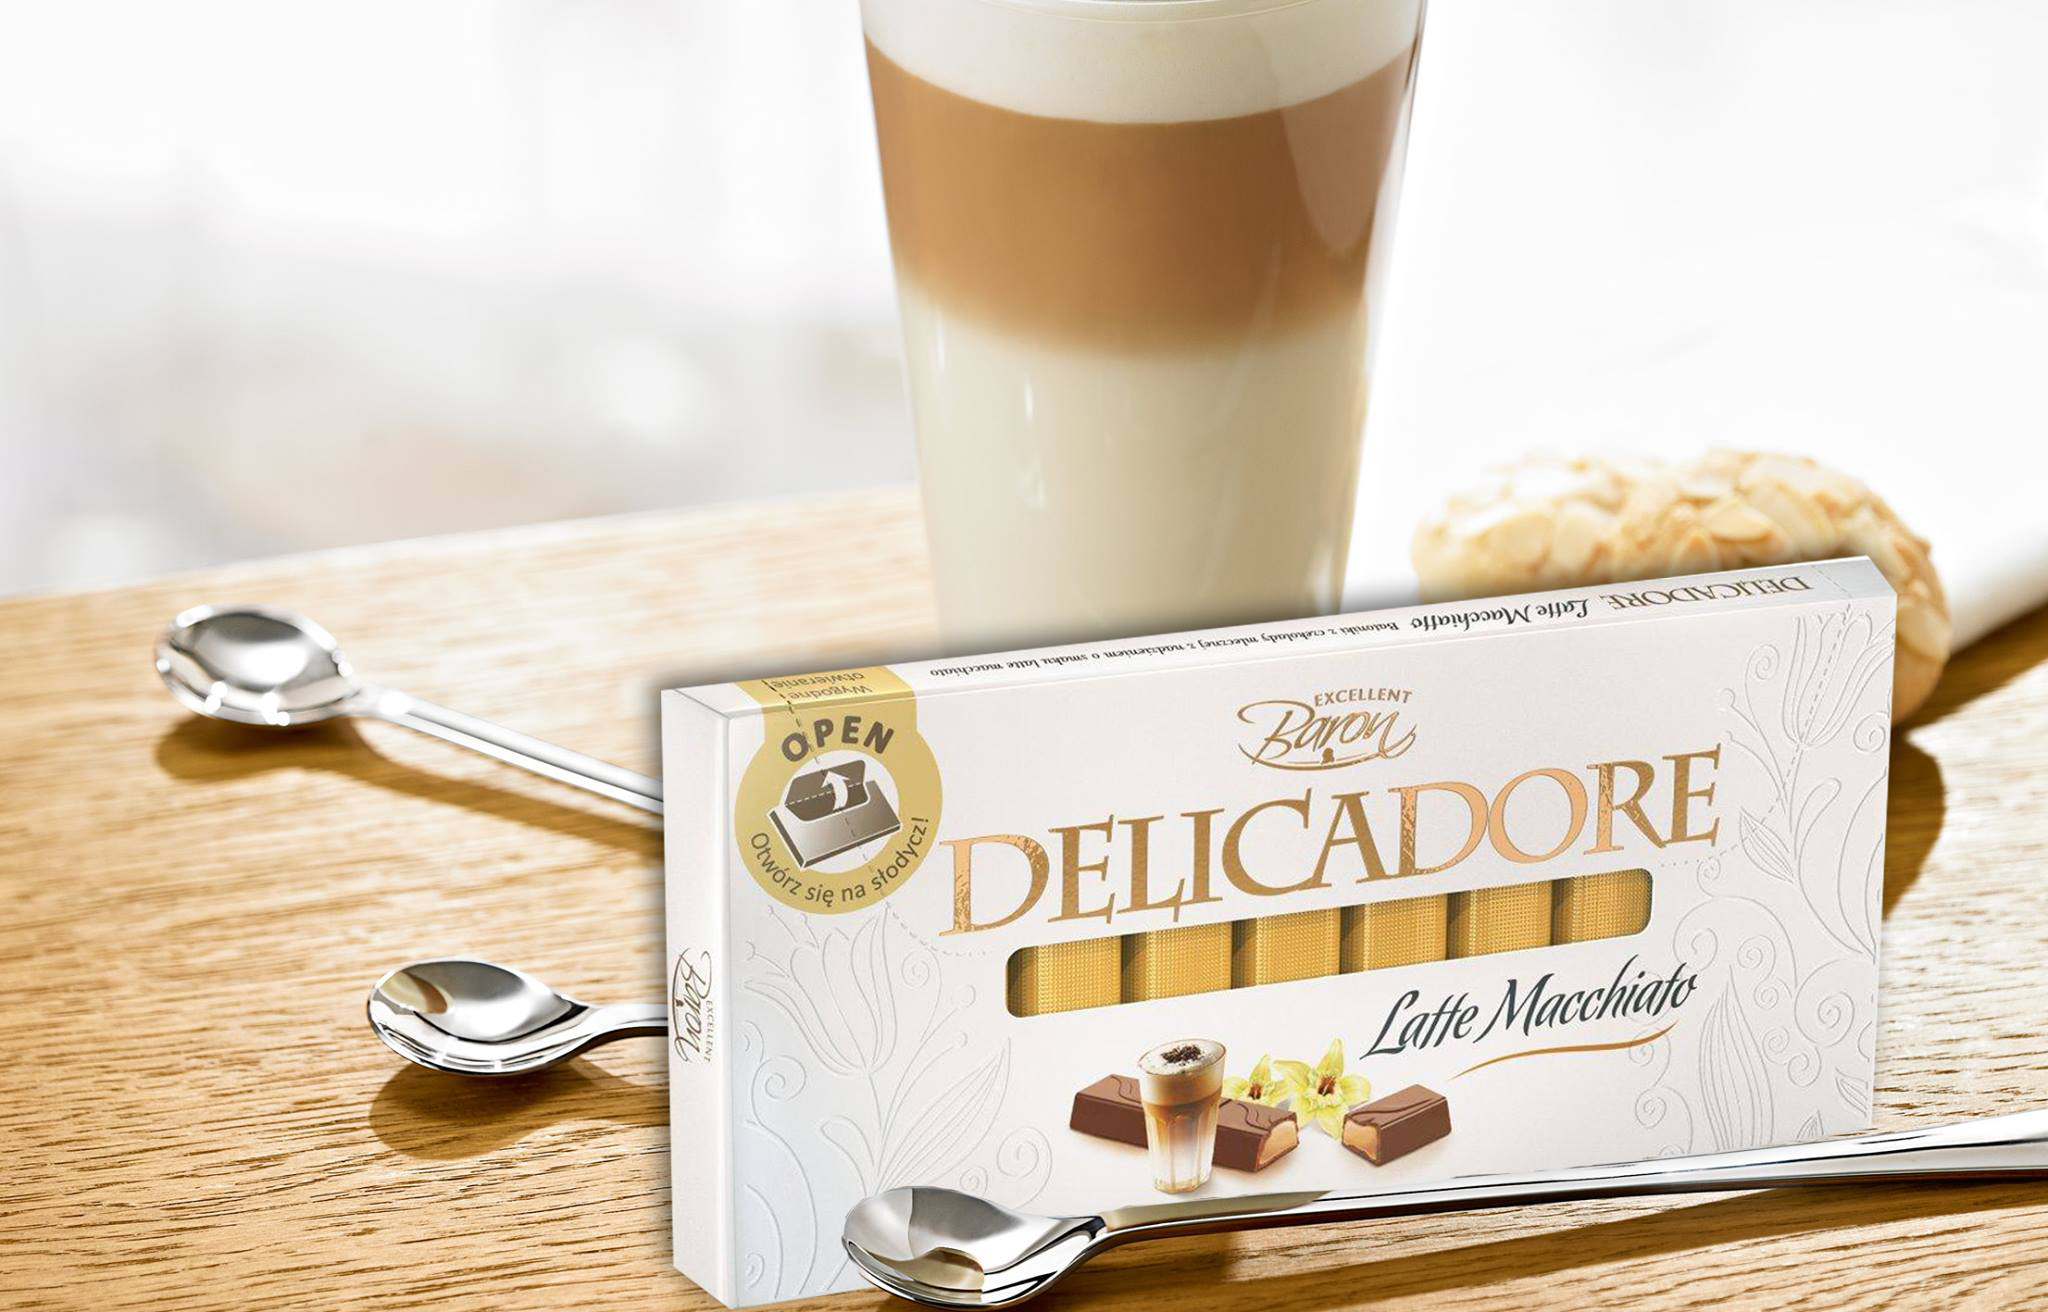 Baron Delicadore  čokolada Macchiato - idealan poklon za Dan zaljubljenih